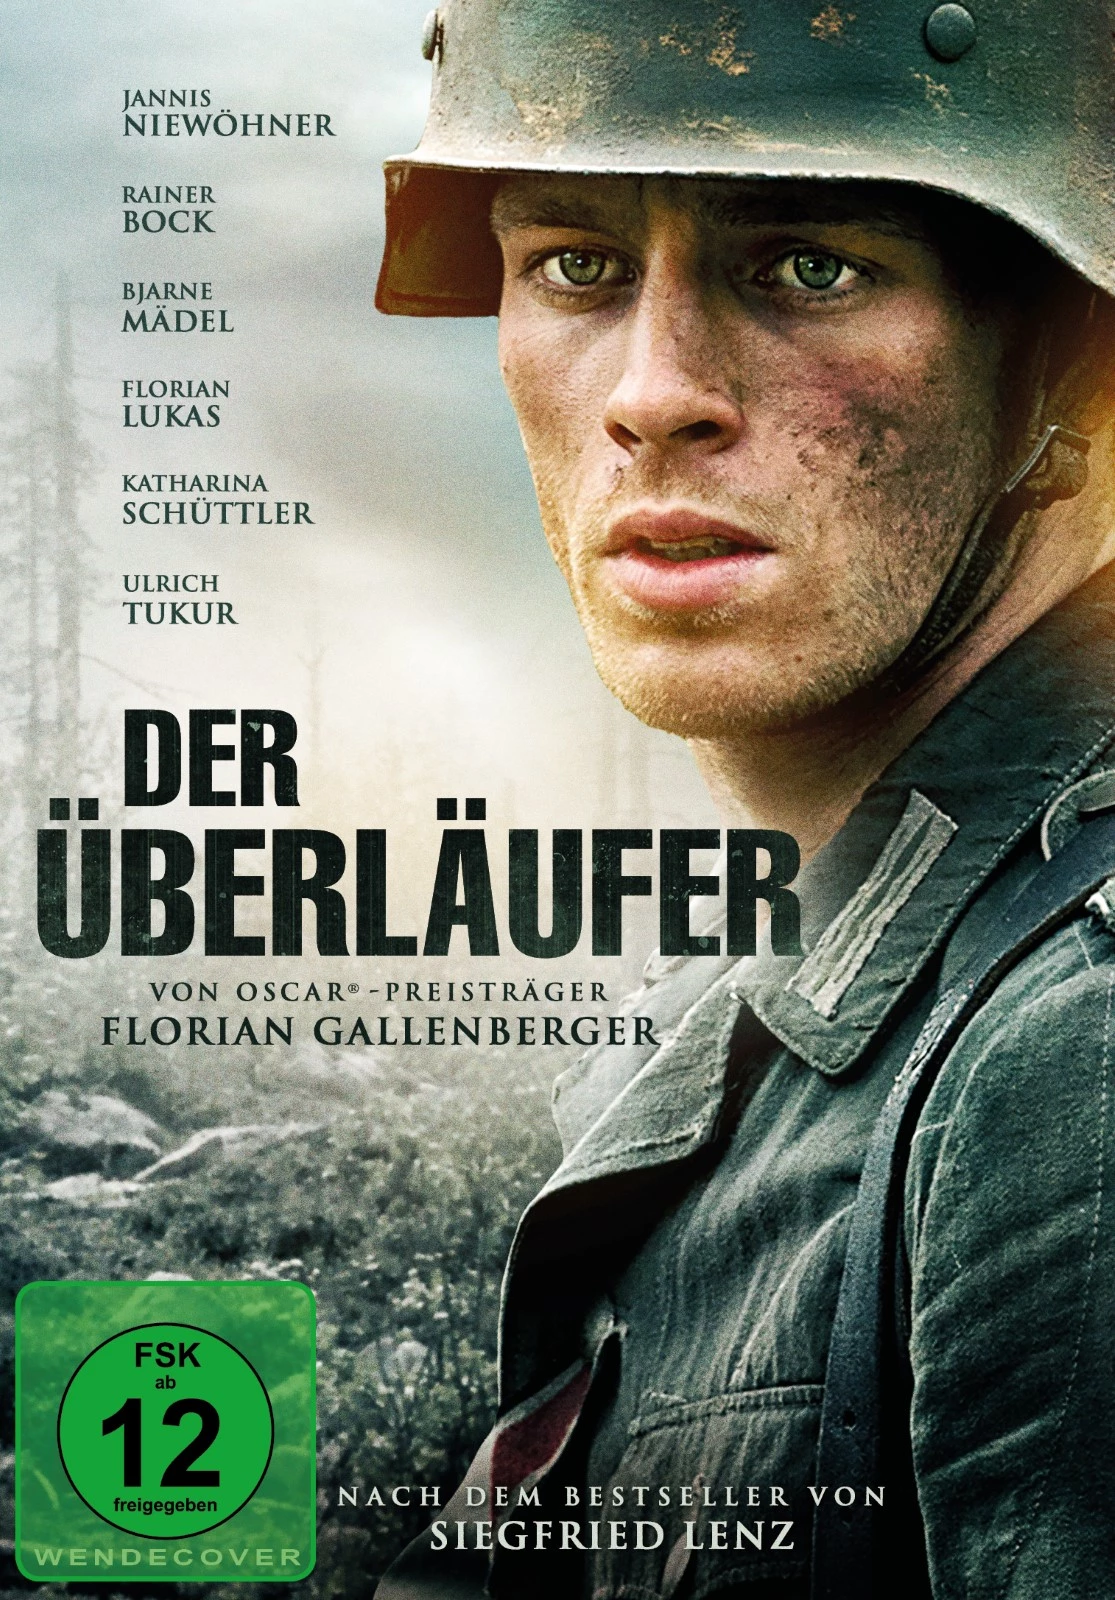 Stiahni si Filmy CZ/SK dabing Prebehlik / Der Uberlaufer (2020)(CZ)[TvRip] = CSFD 74%